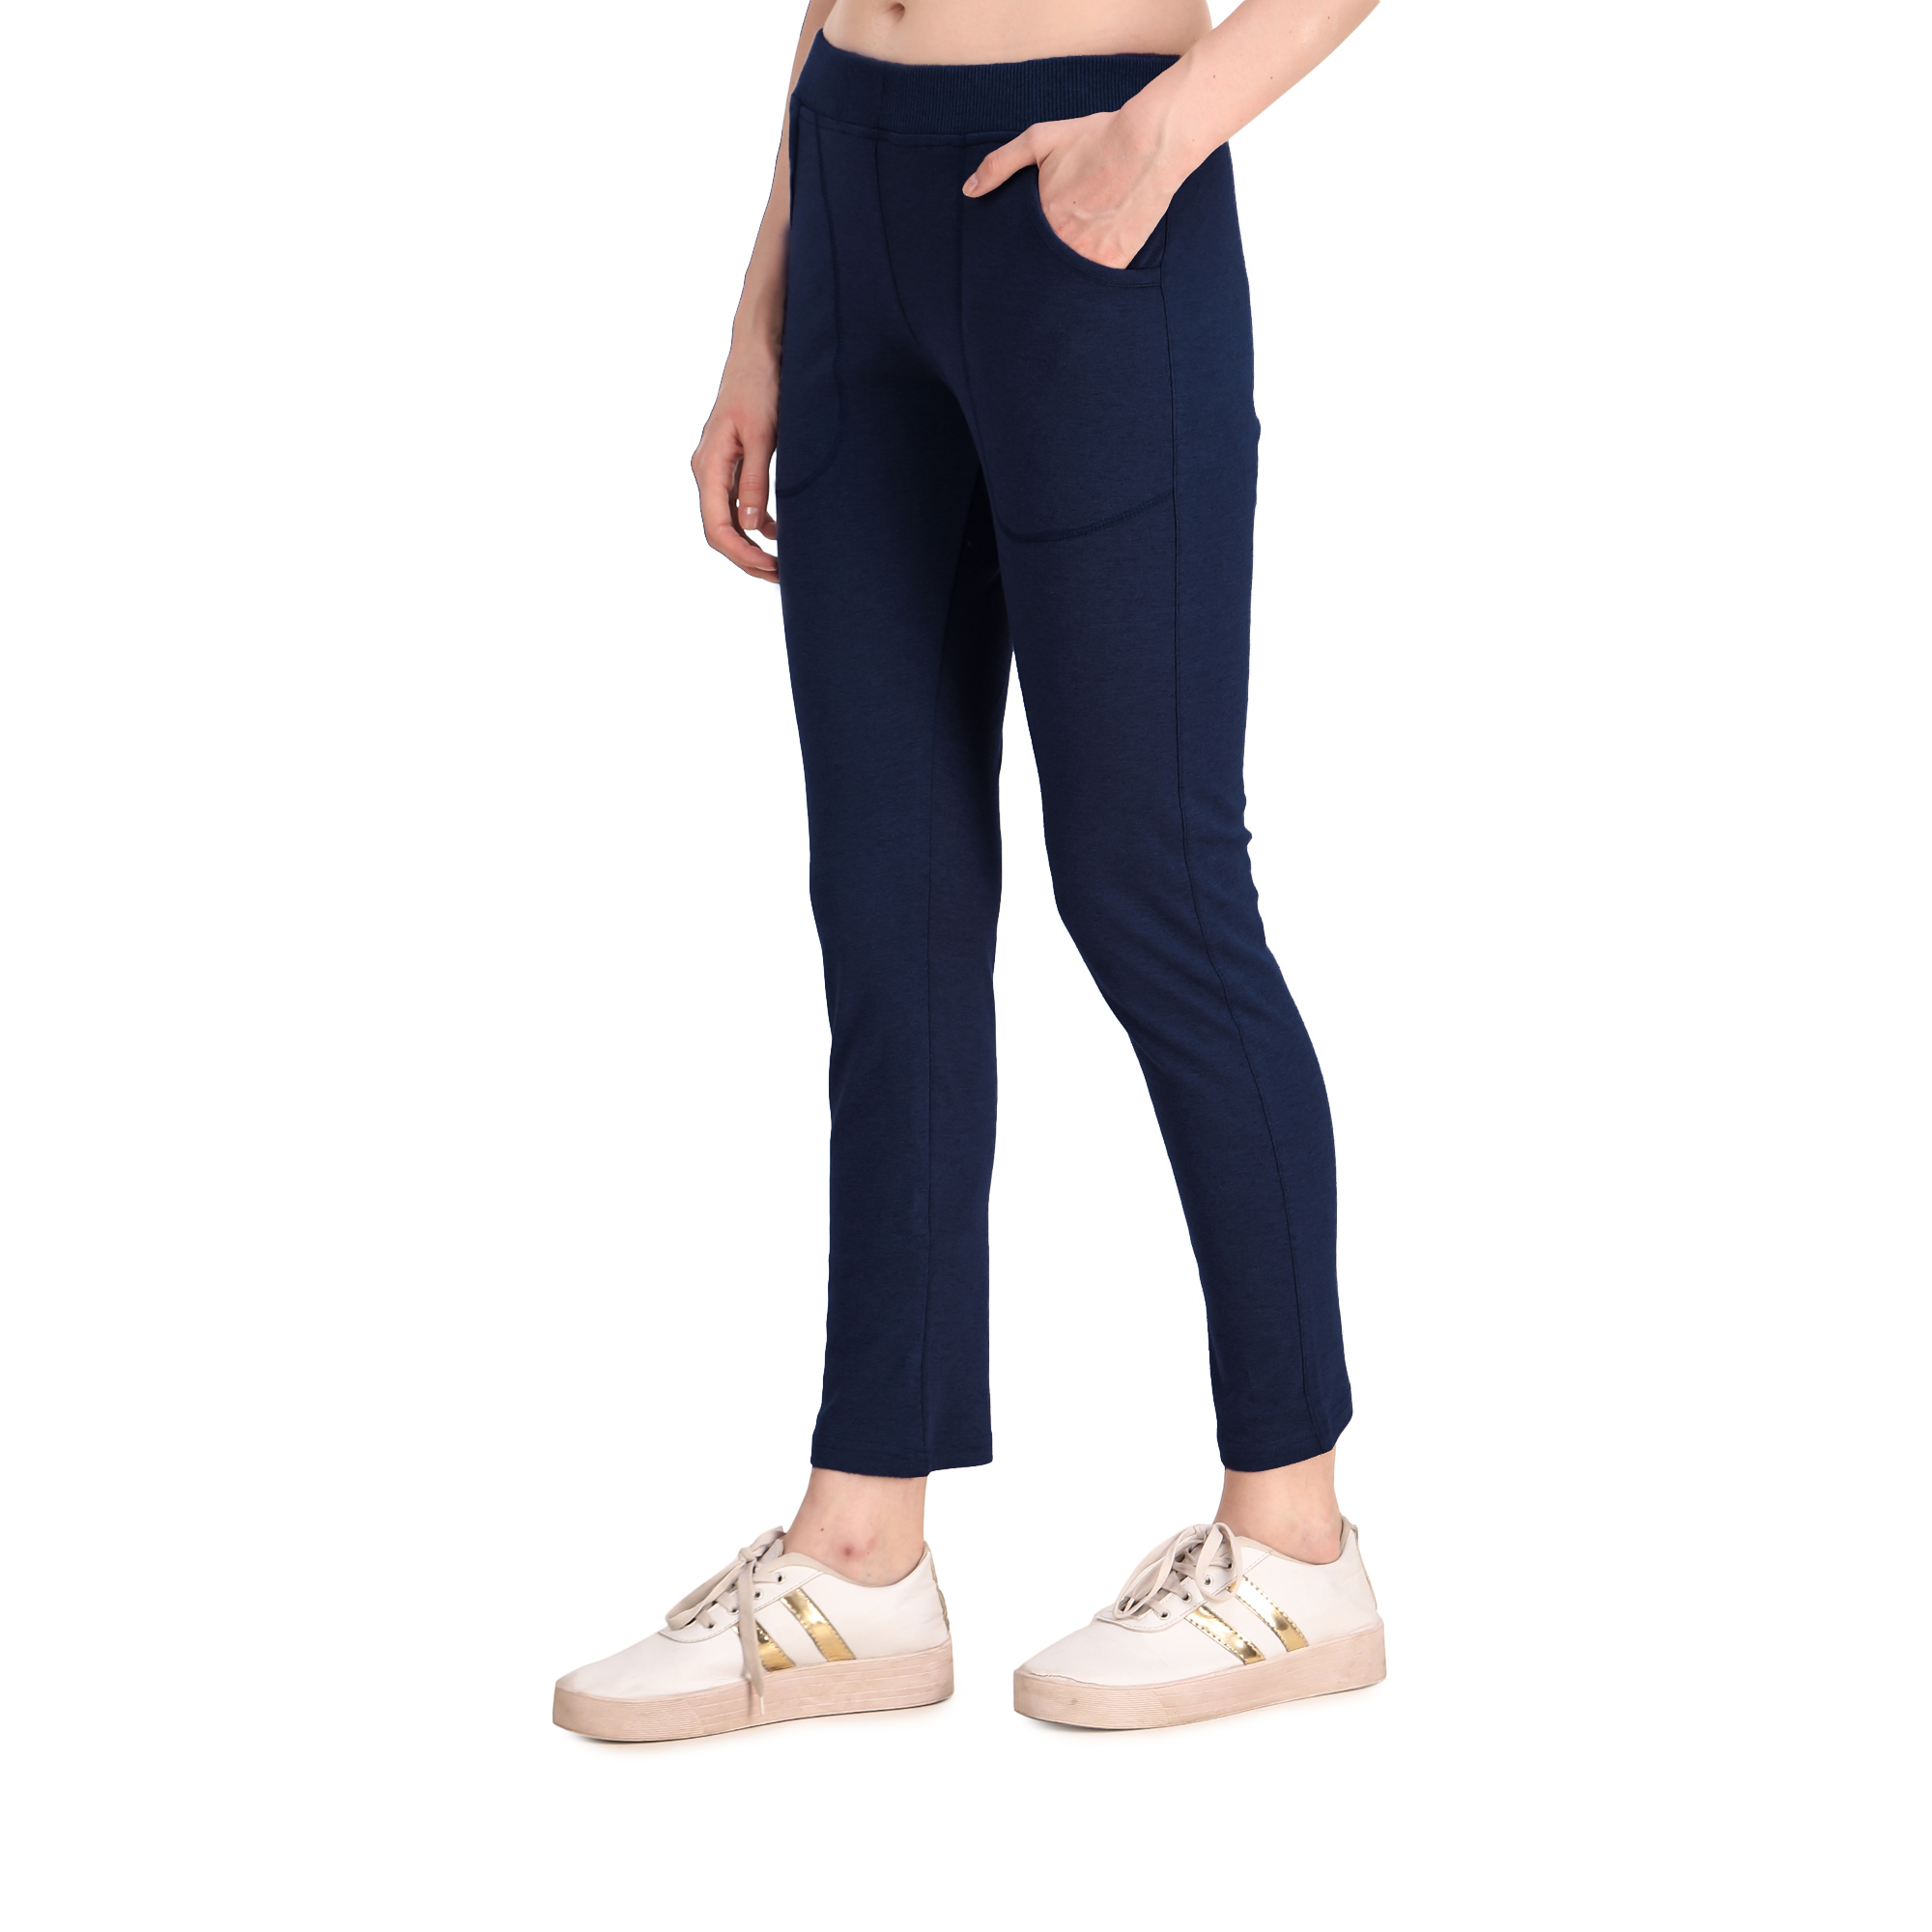 Cotton Track Pants for Women's (Blue)